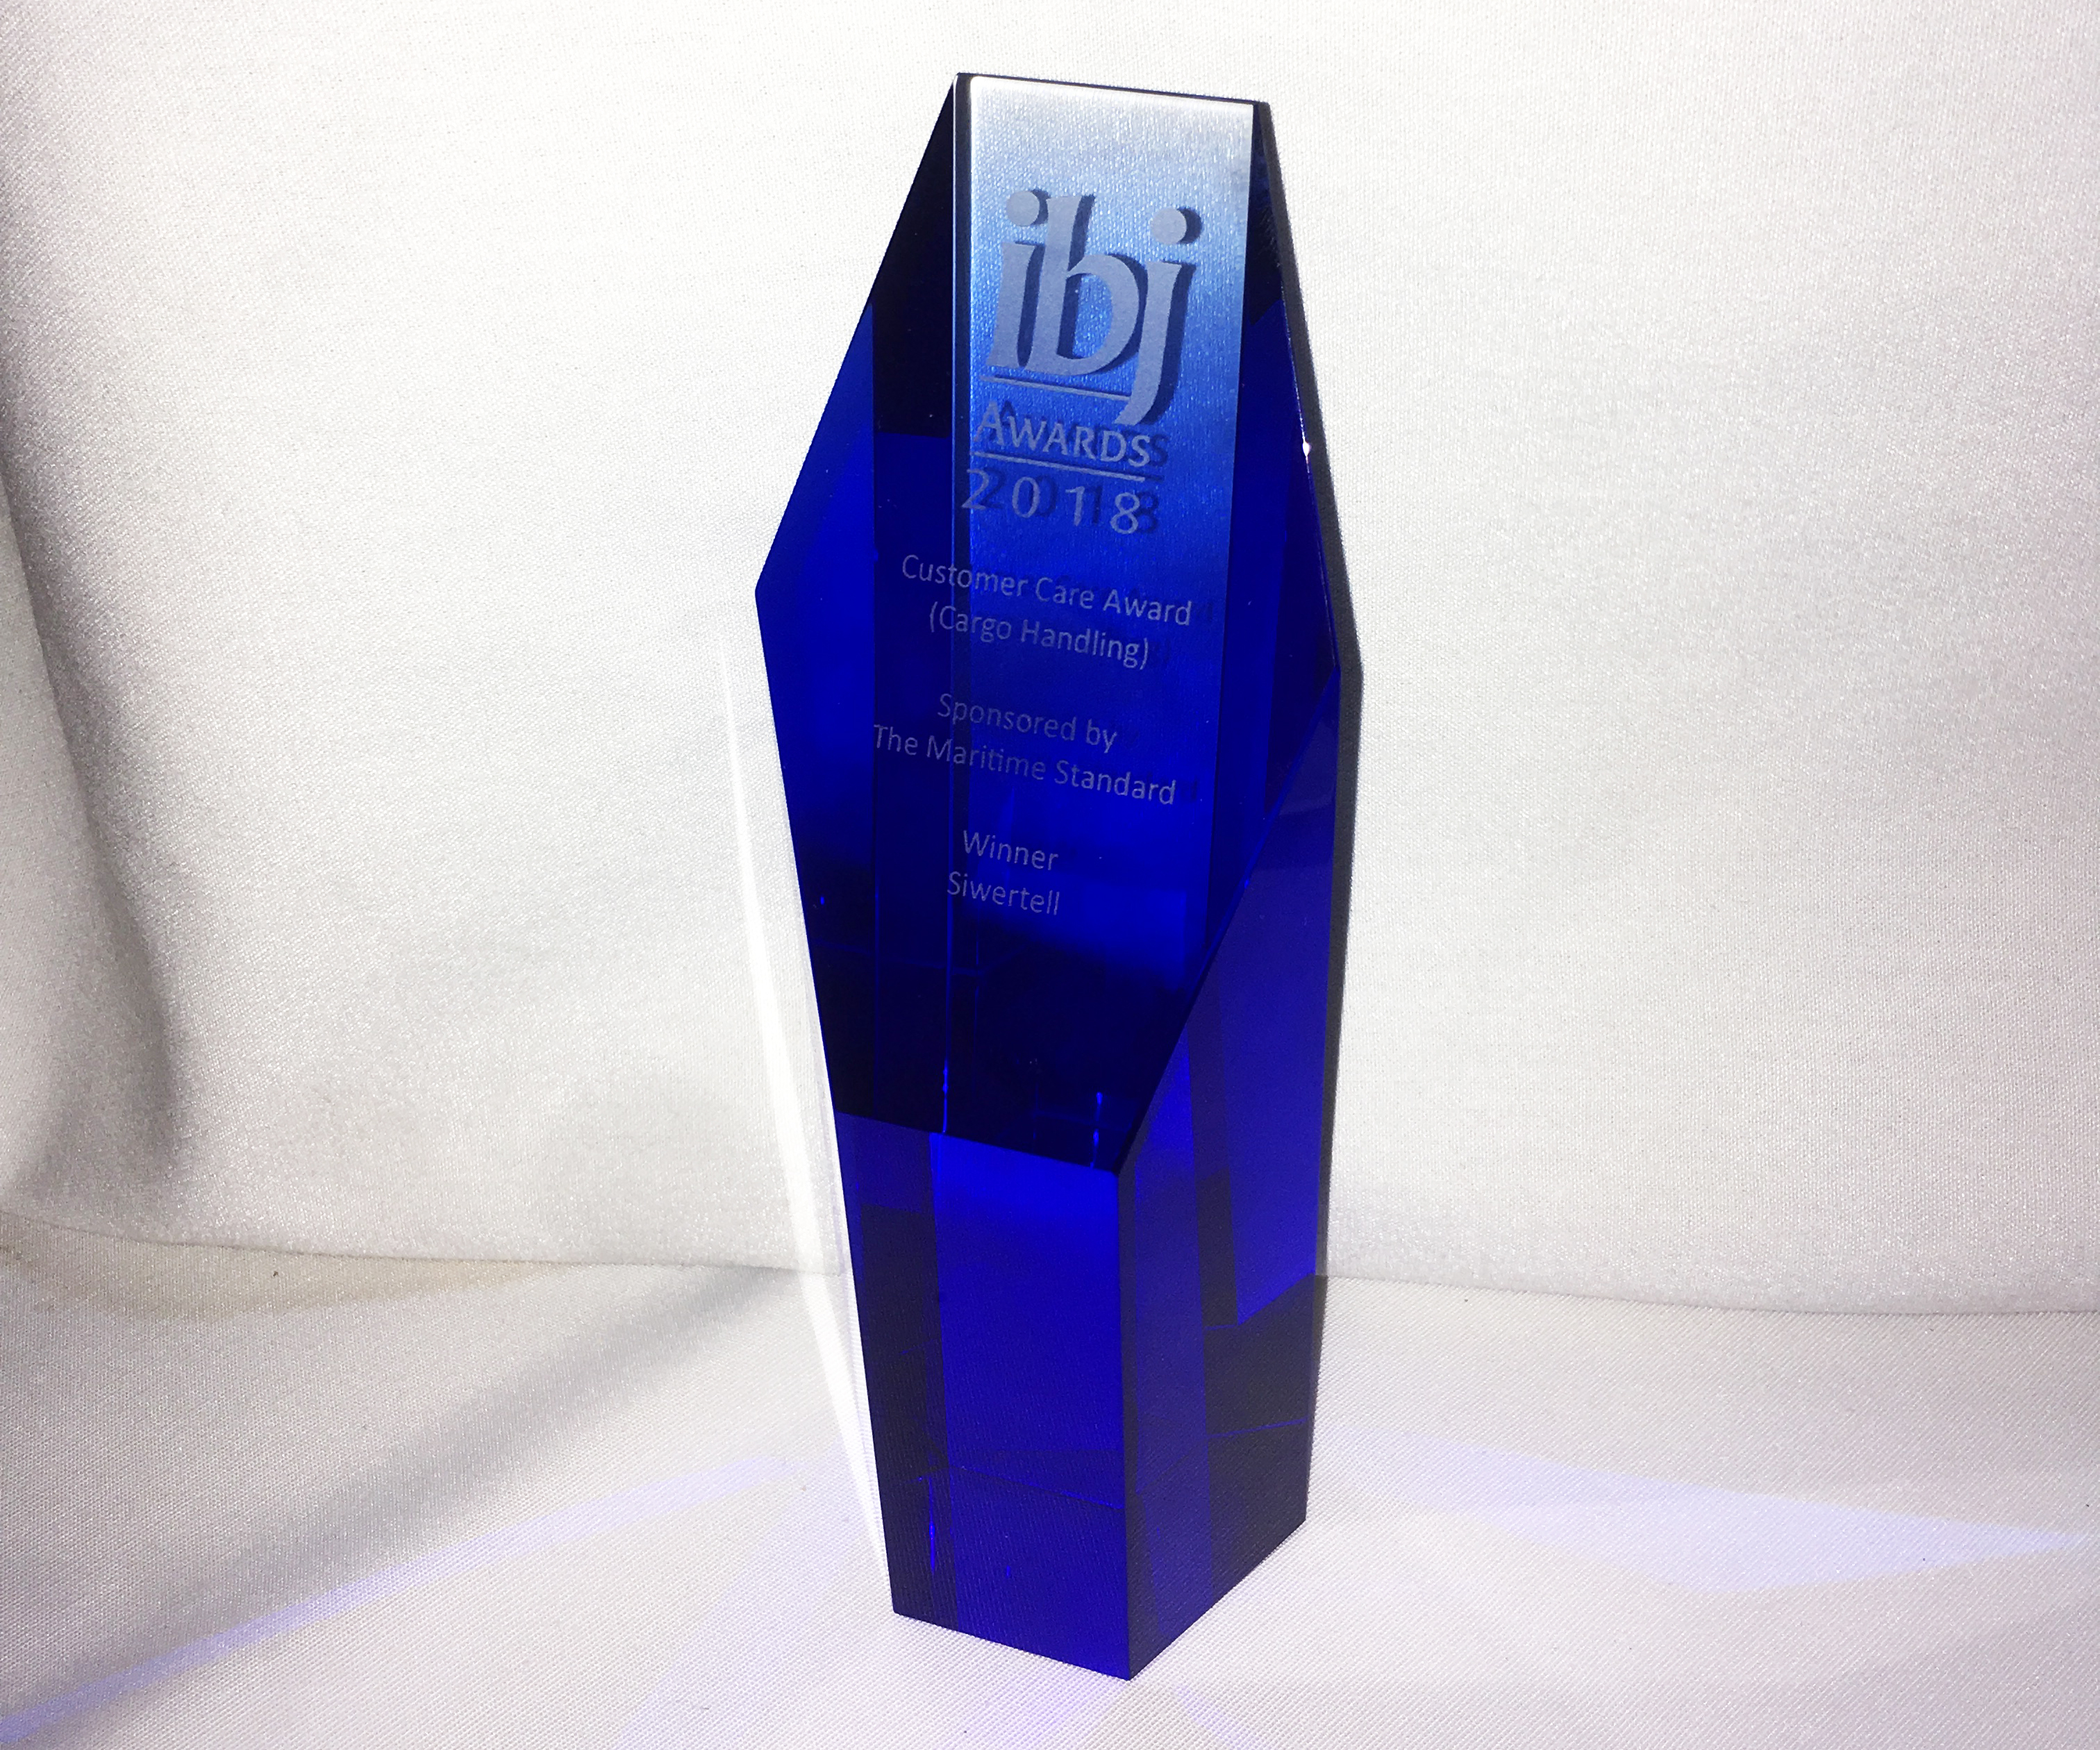 Ibj awards prize 2018